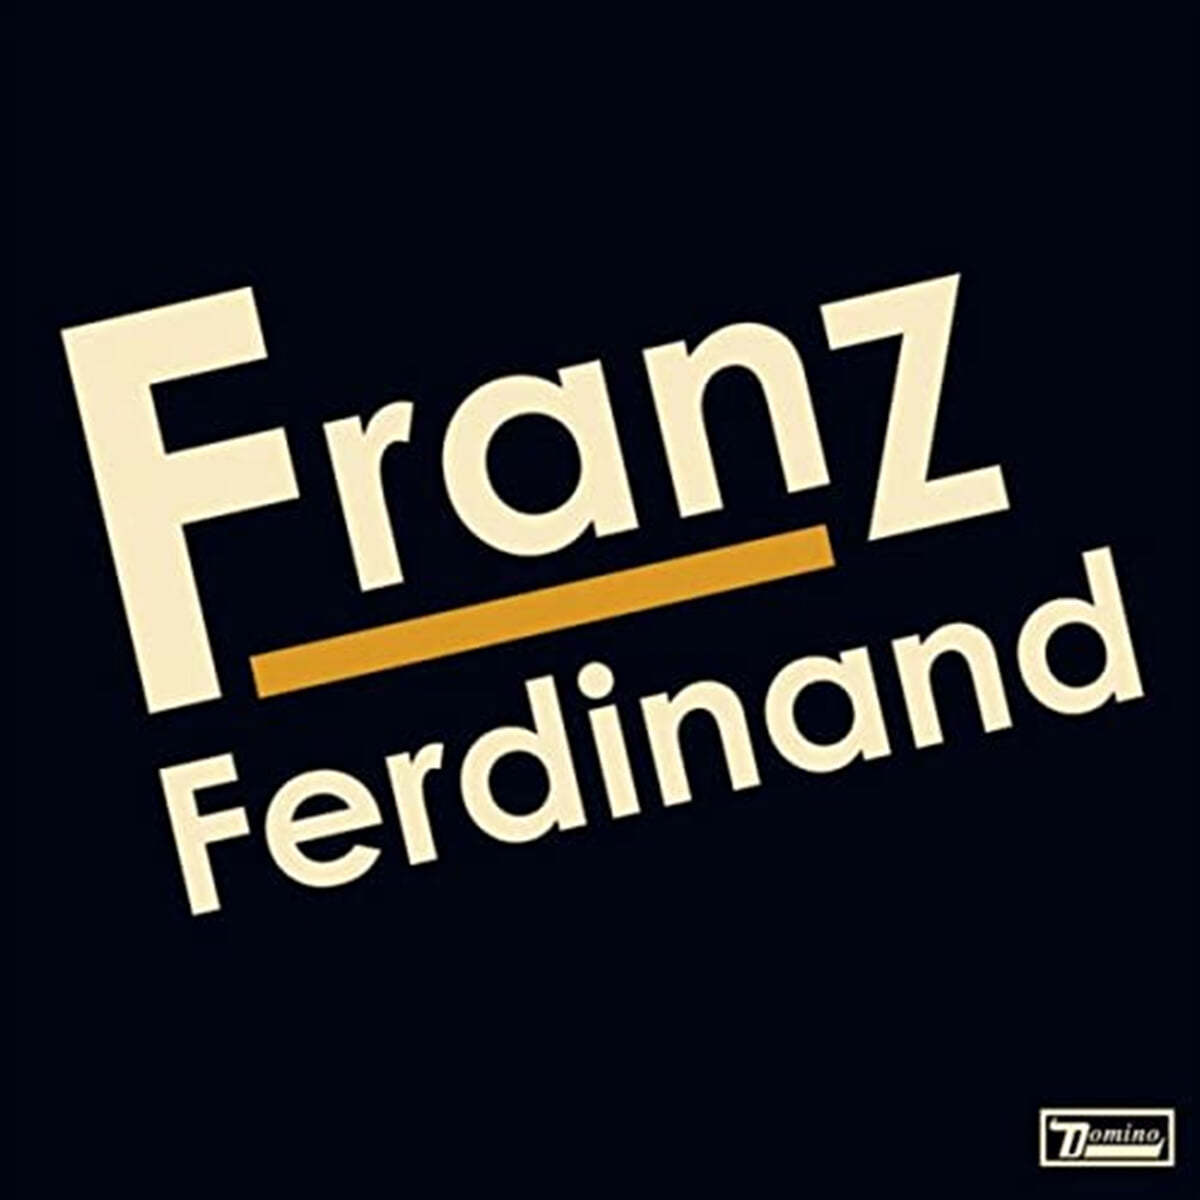 Franz Ferdinand (프란츠 퍼디난드) - 5집 Franz Ferdinand 